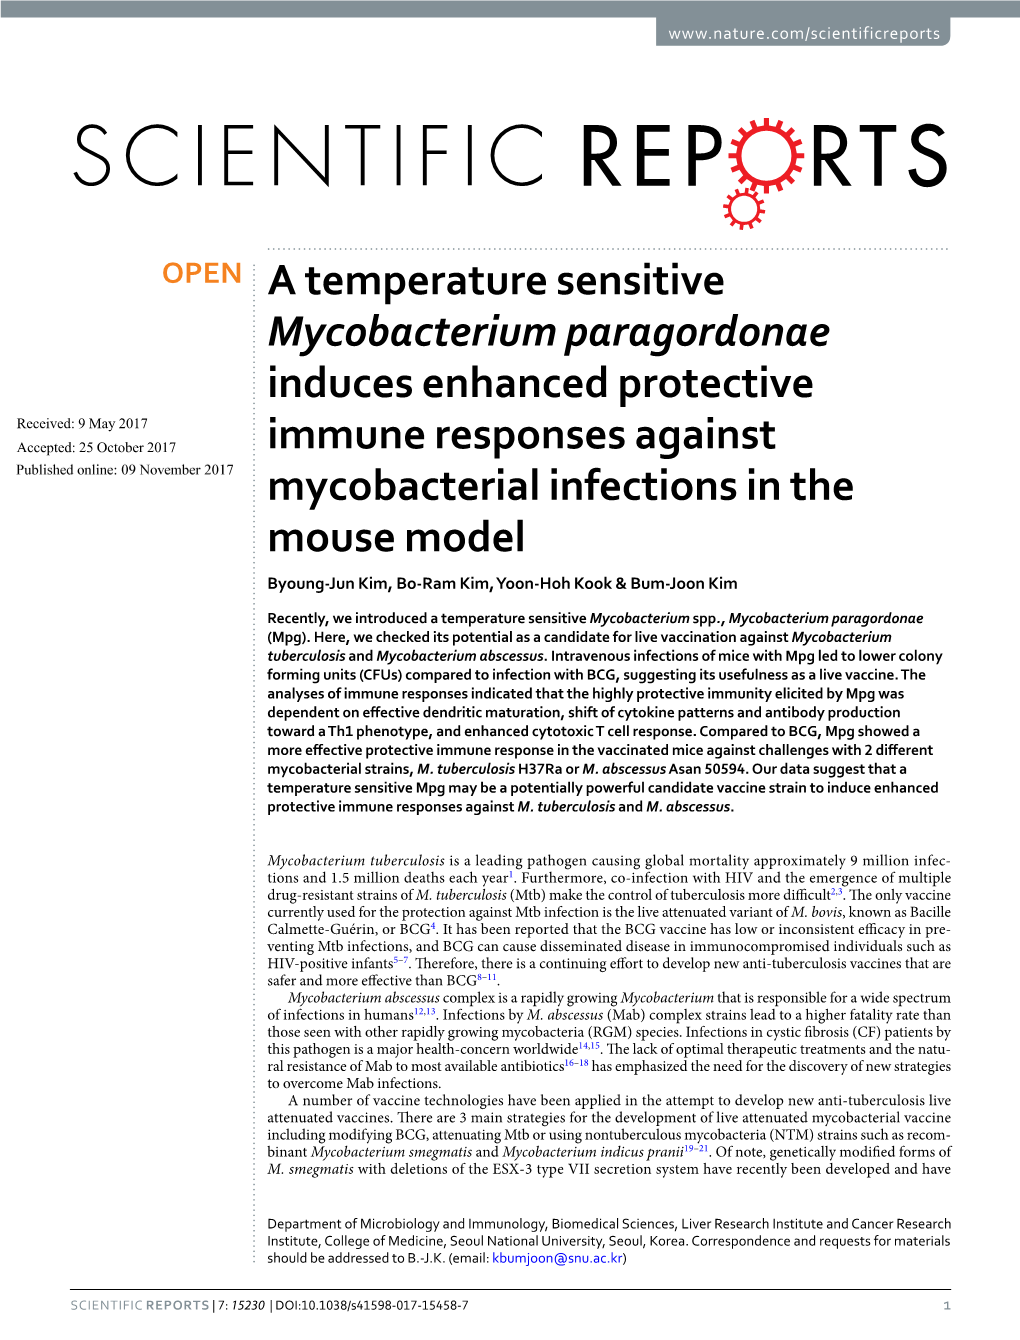 A Temperature Sensitive Mycobacterium Paragordonae